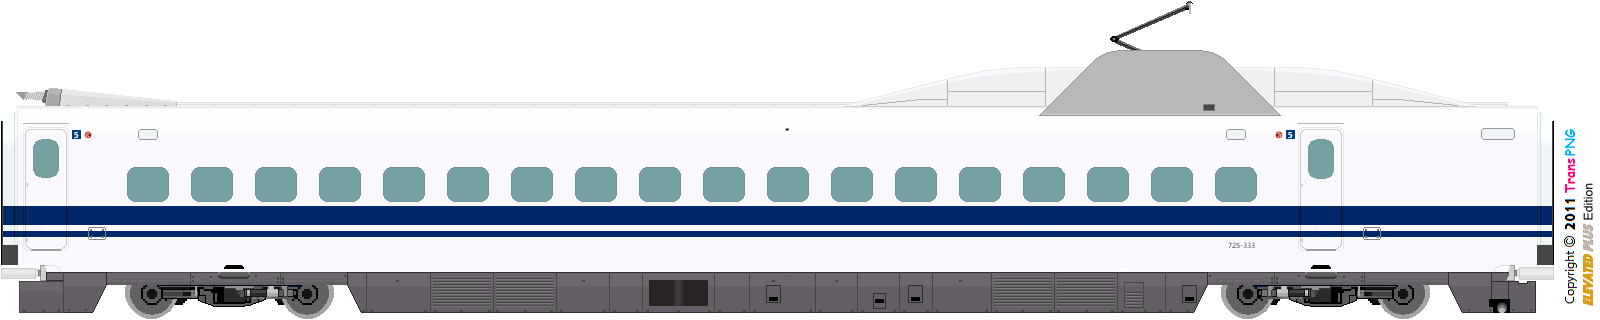 9010 - [9010] Central Japan Railway 52287580731_7f8e4a2fb3_o